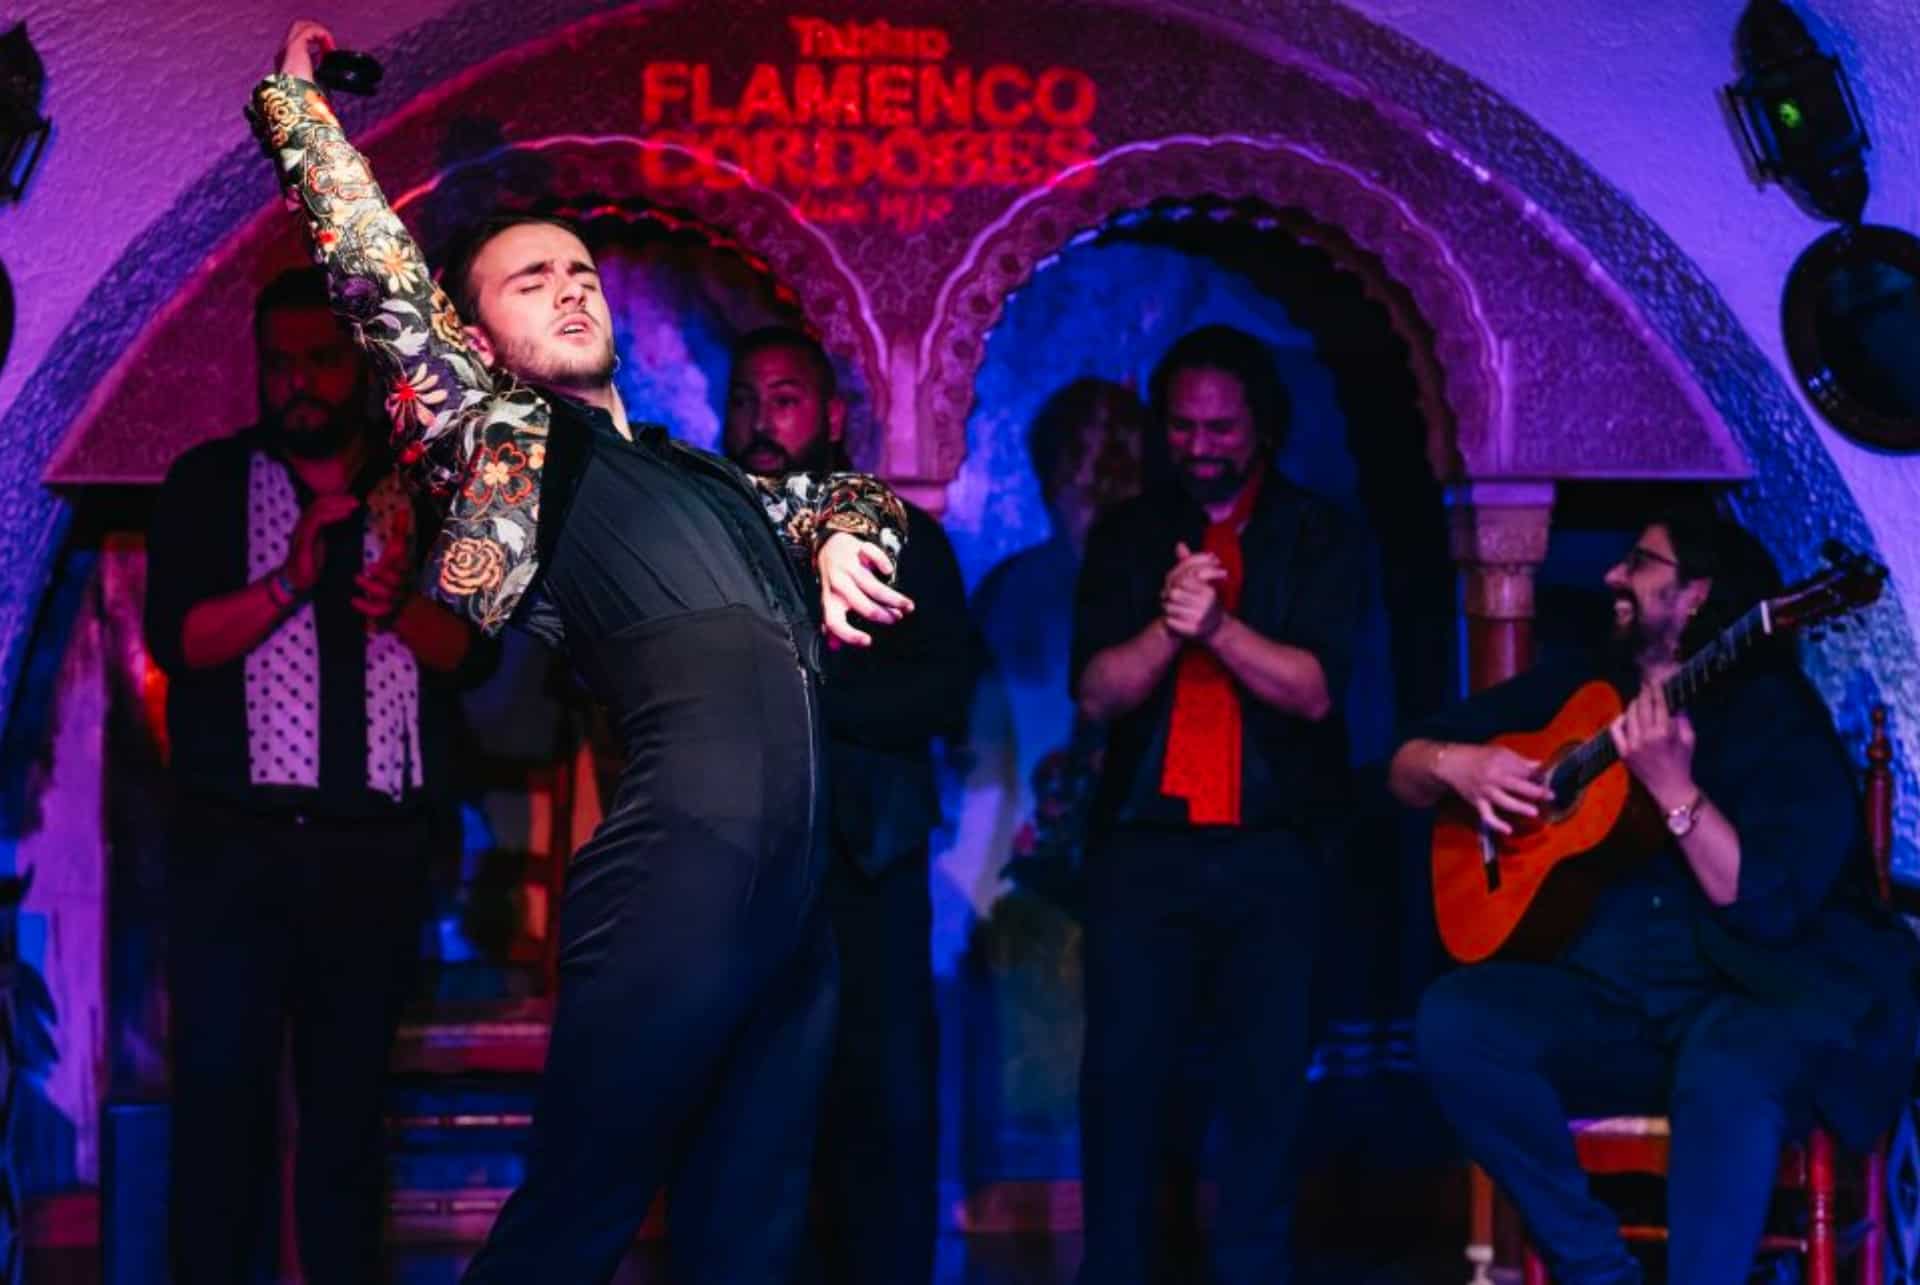 spectacle de flamenco a barcelone